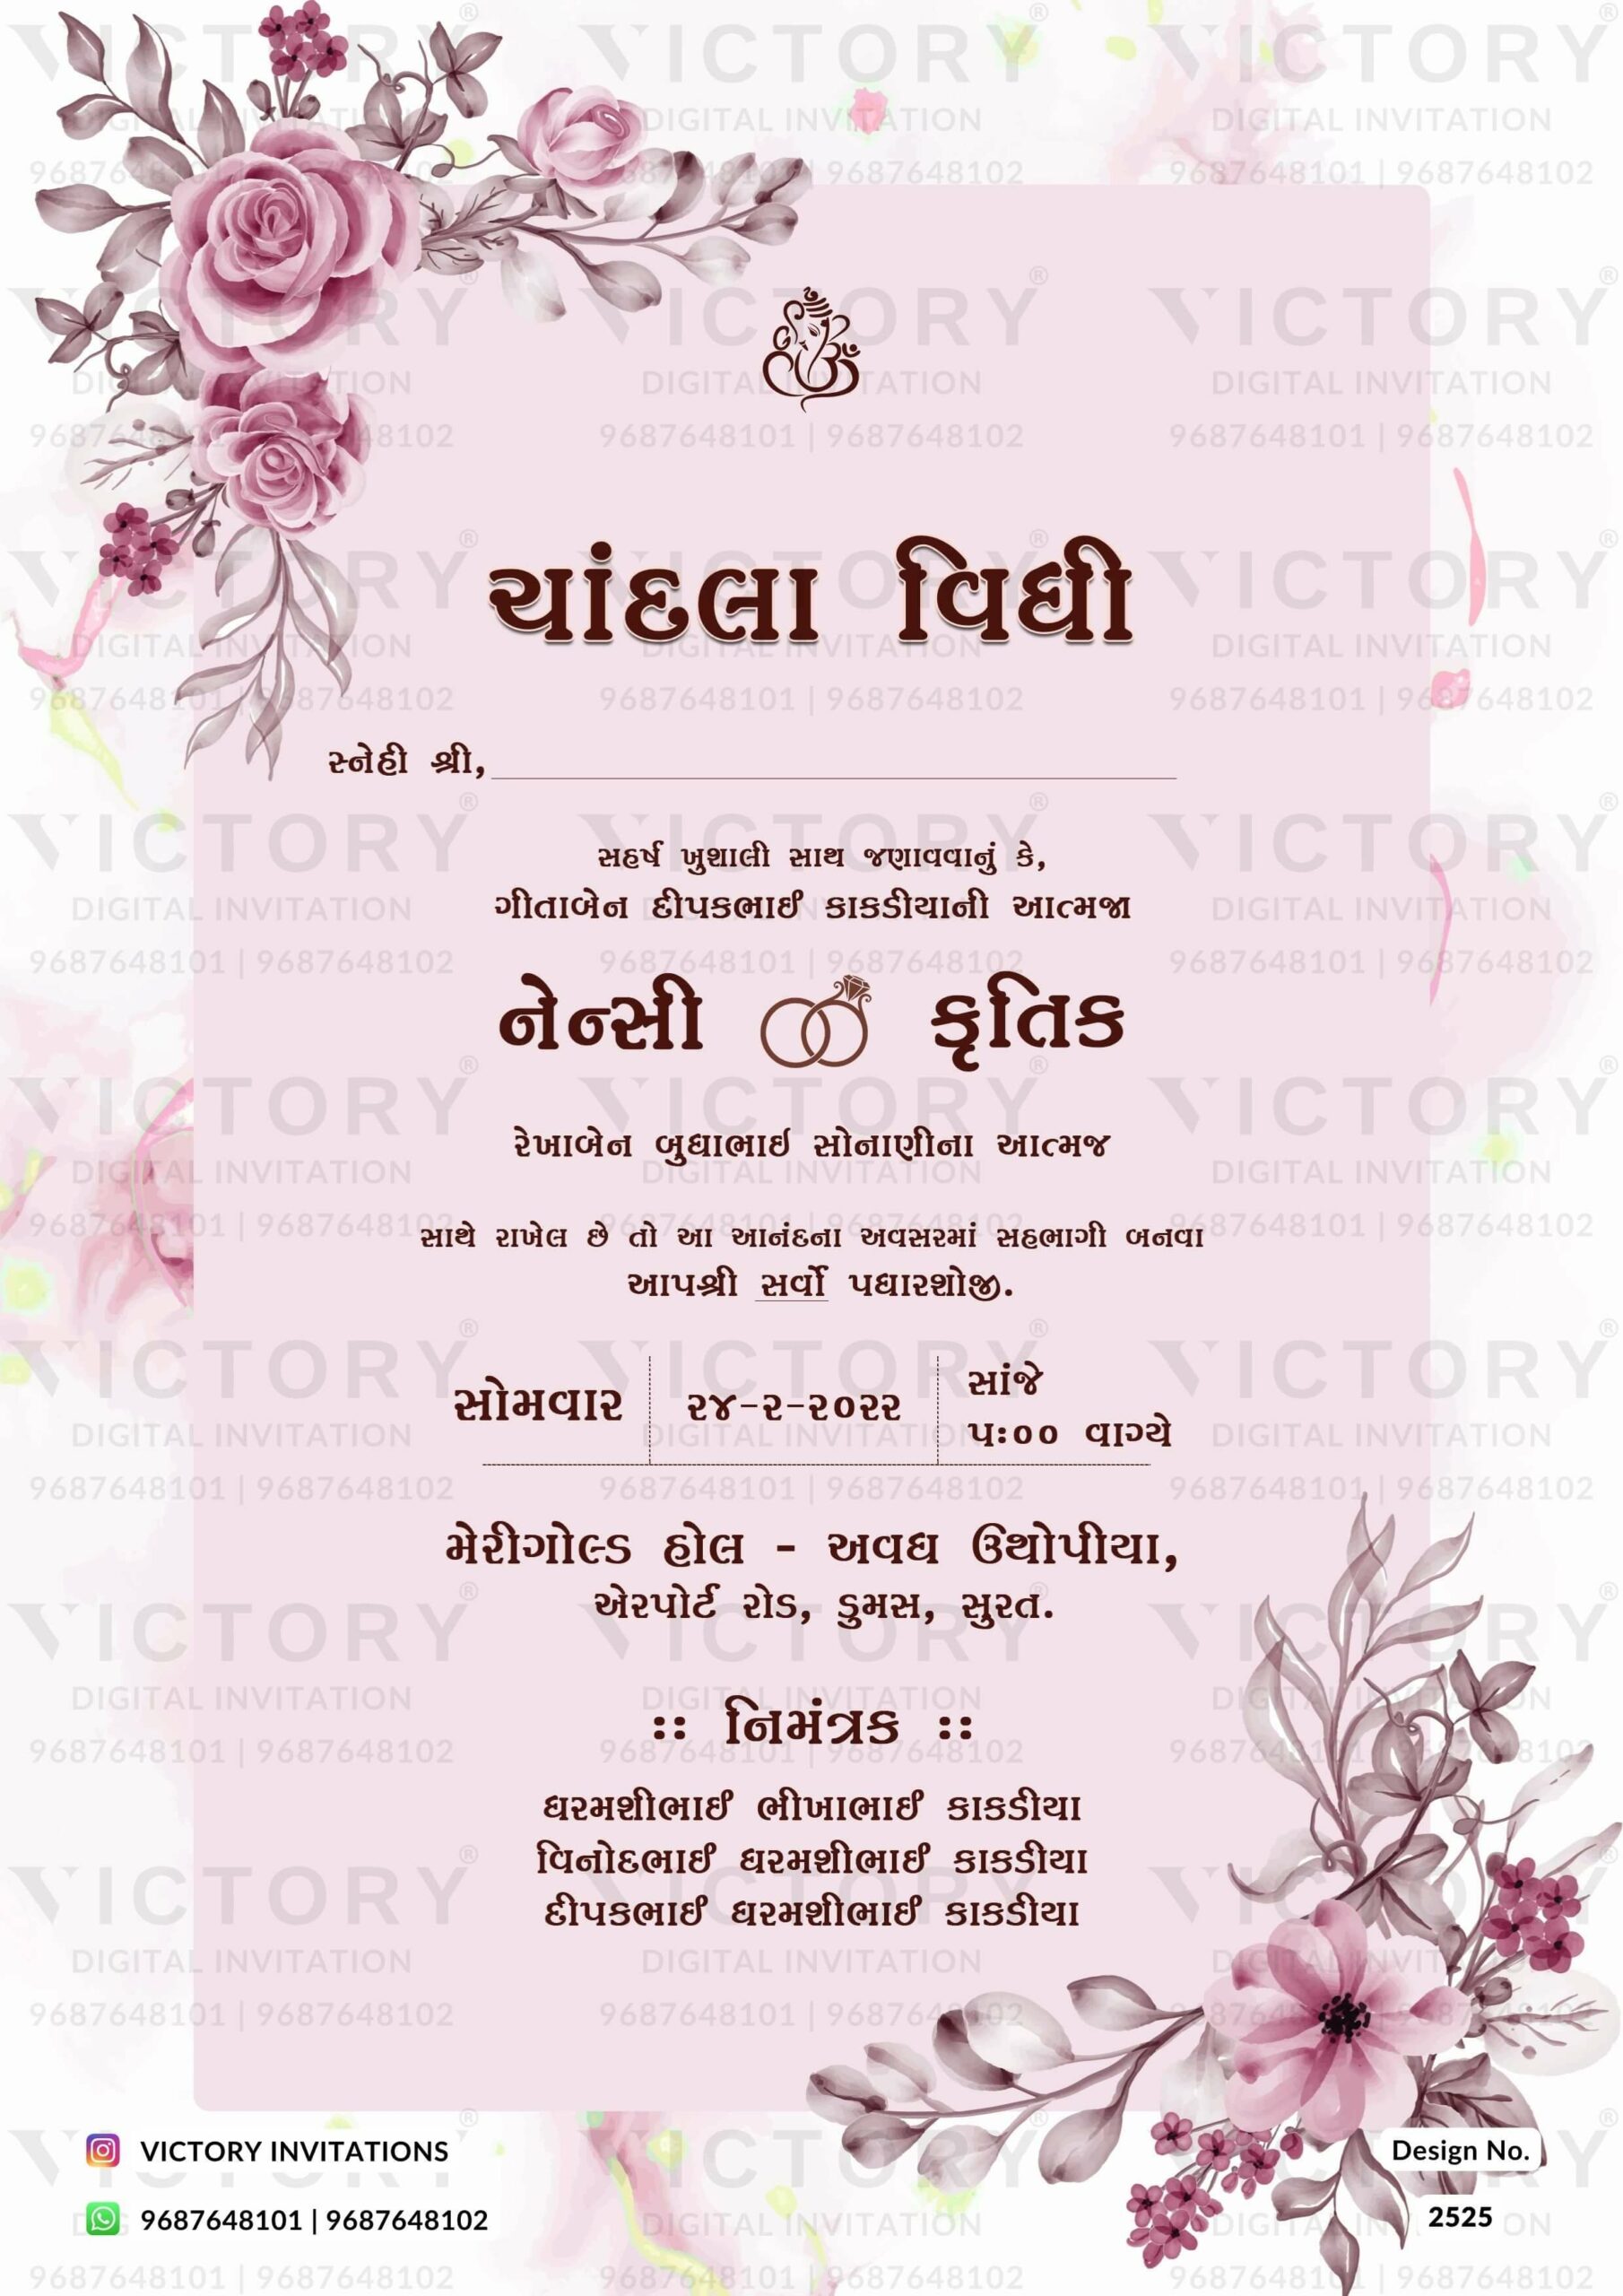 soft pink color floral theme digital engagement invitation card in Gujarati language design 2525